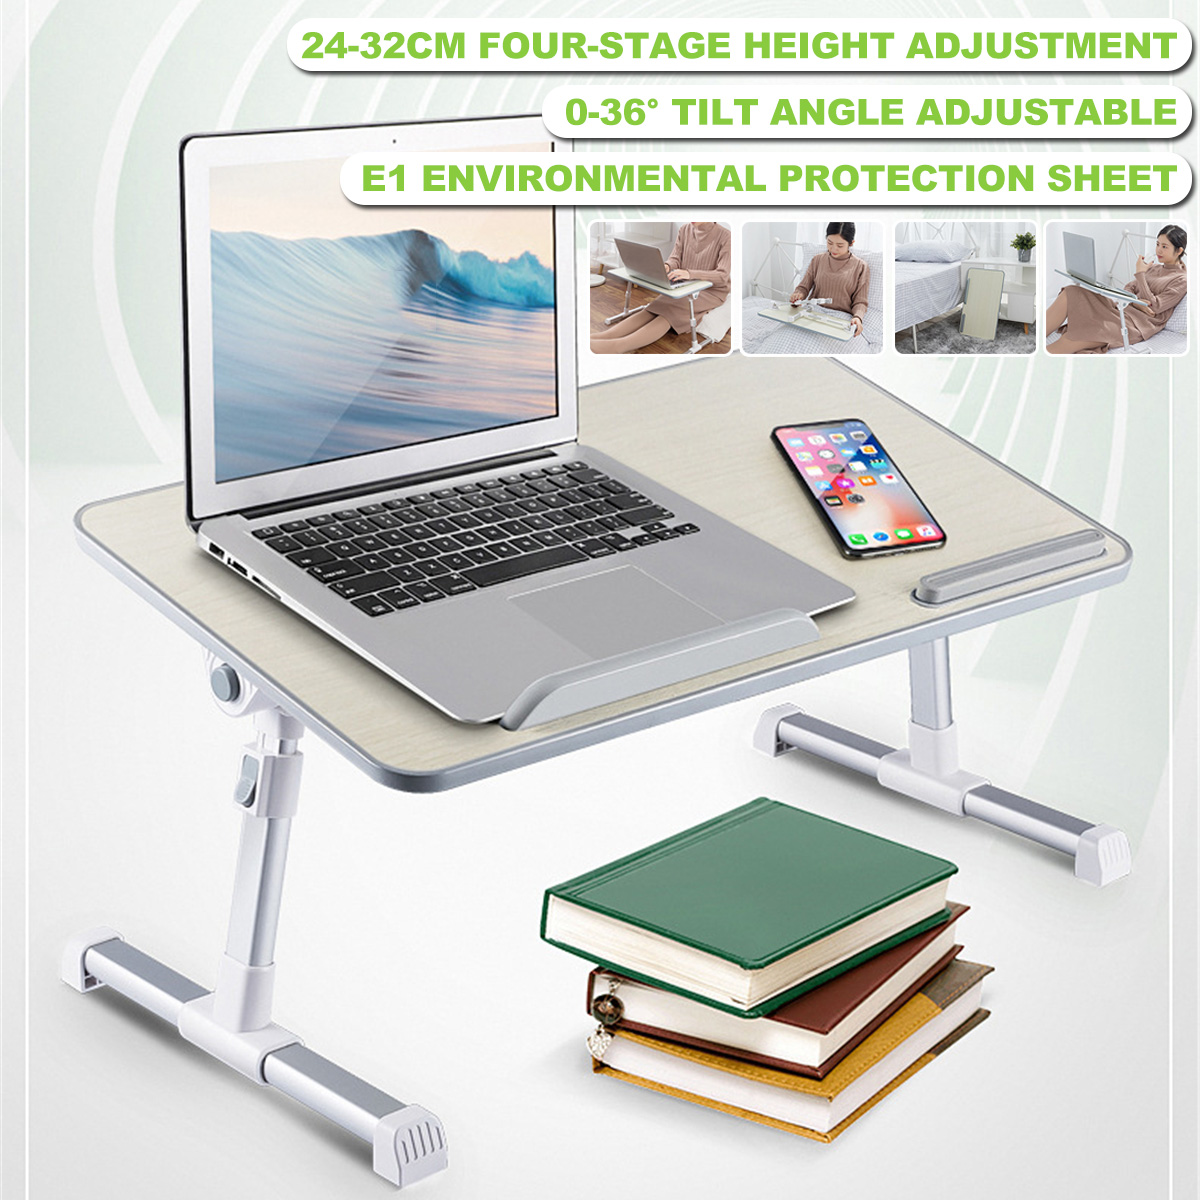 Universal-Folding-Height-Angle-Adjustable-Home-Bed-Macbook-Phone-Holder-Desk-1873295-2